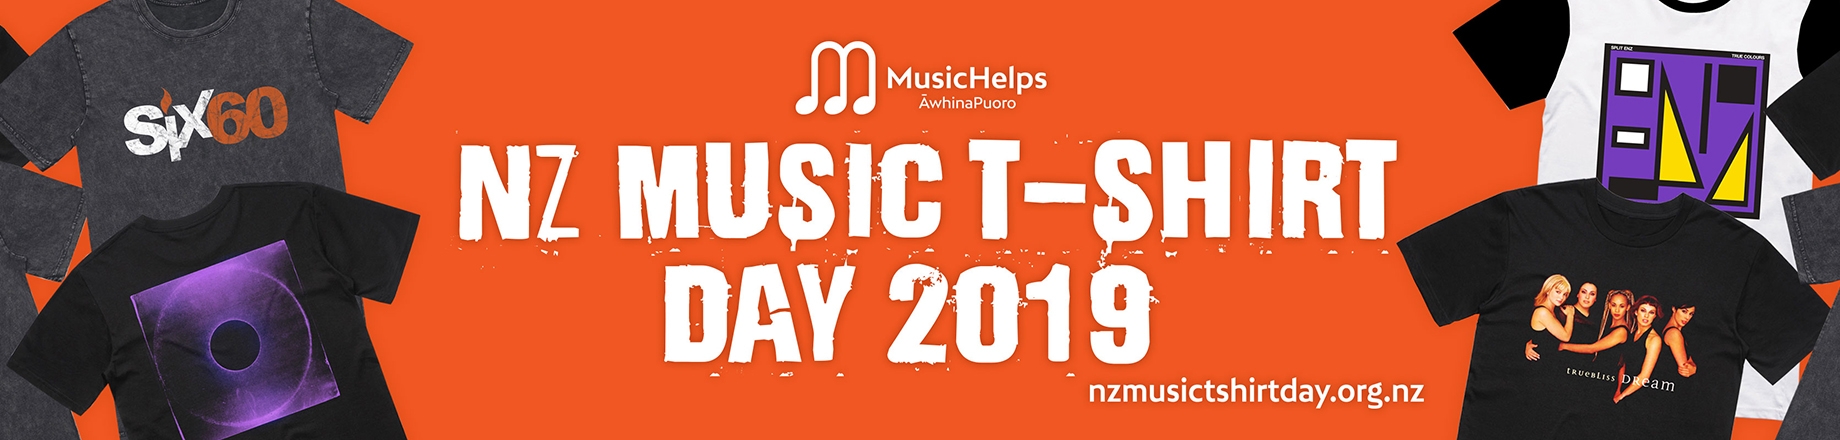 NZ Music T-Shirt Day for MusicHelps